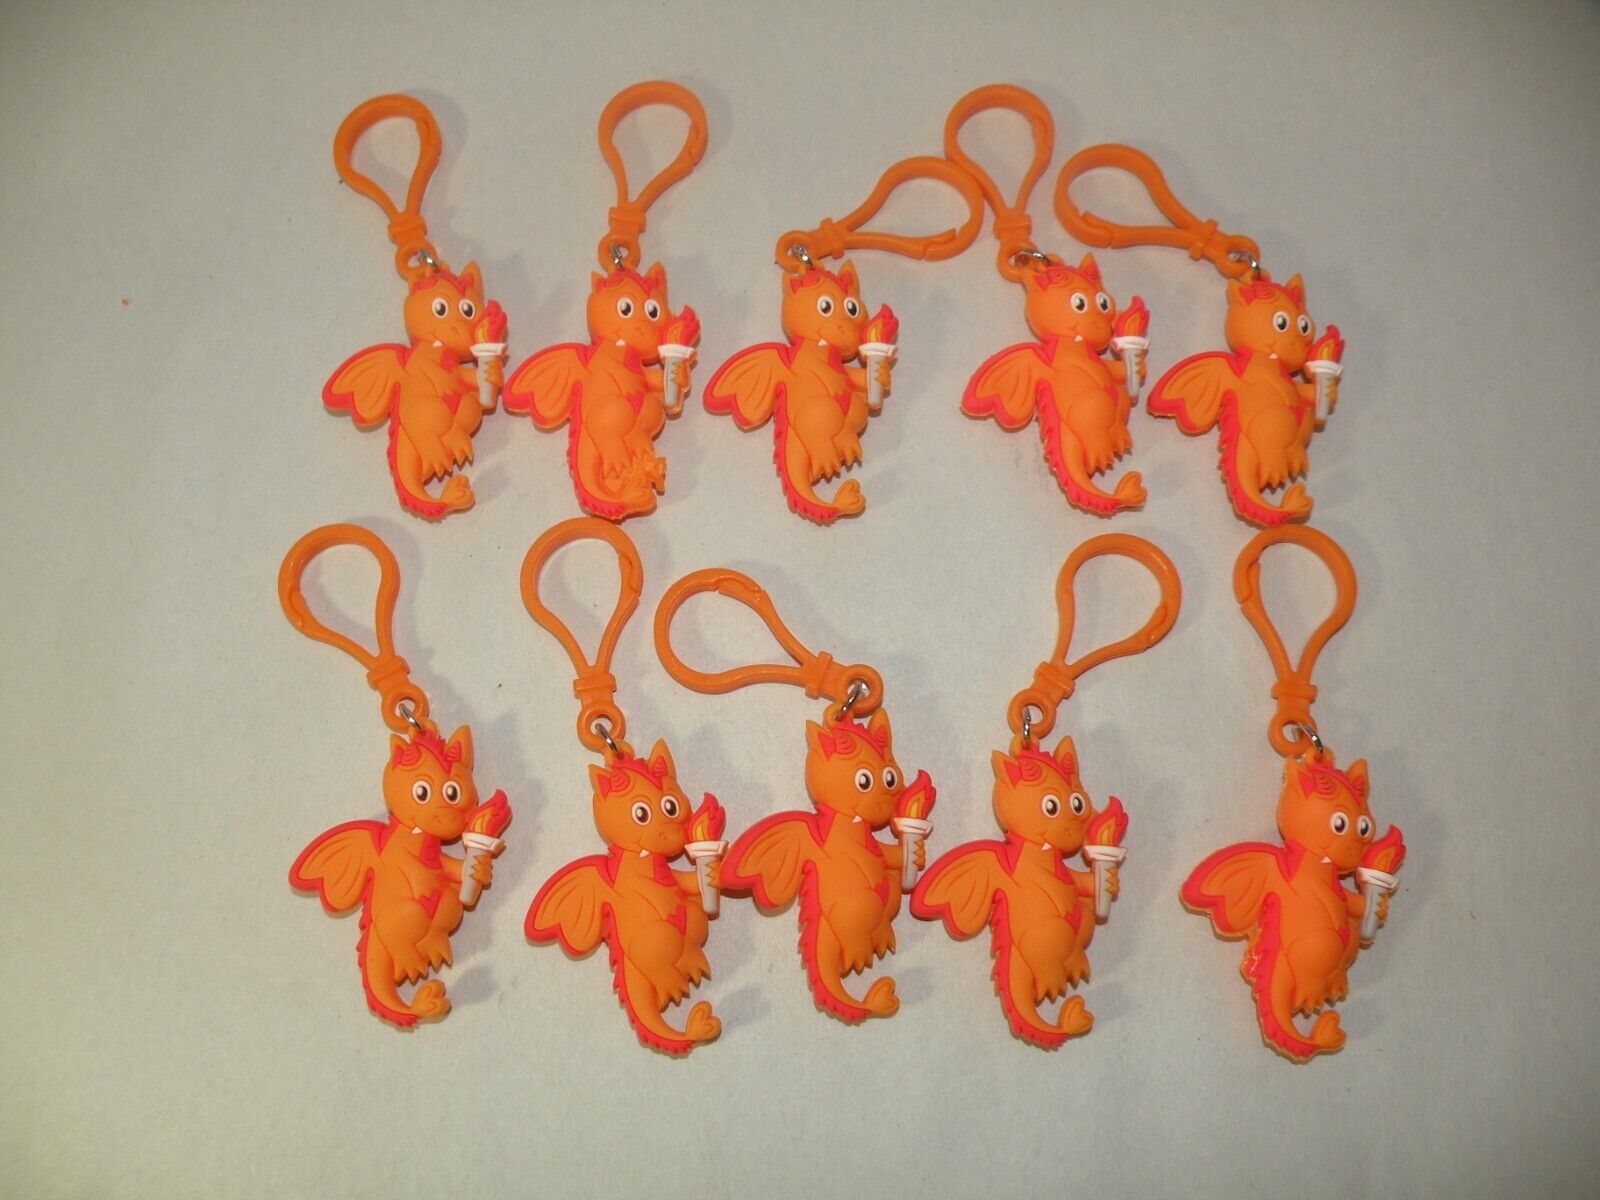 10x Kids Challenge Keychain Hearty Orange Dragon American Heart Association C